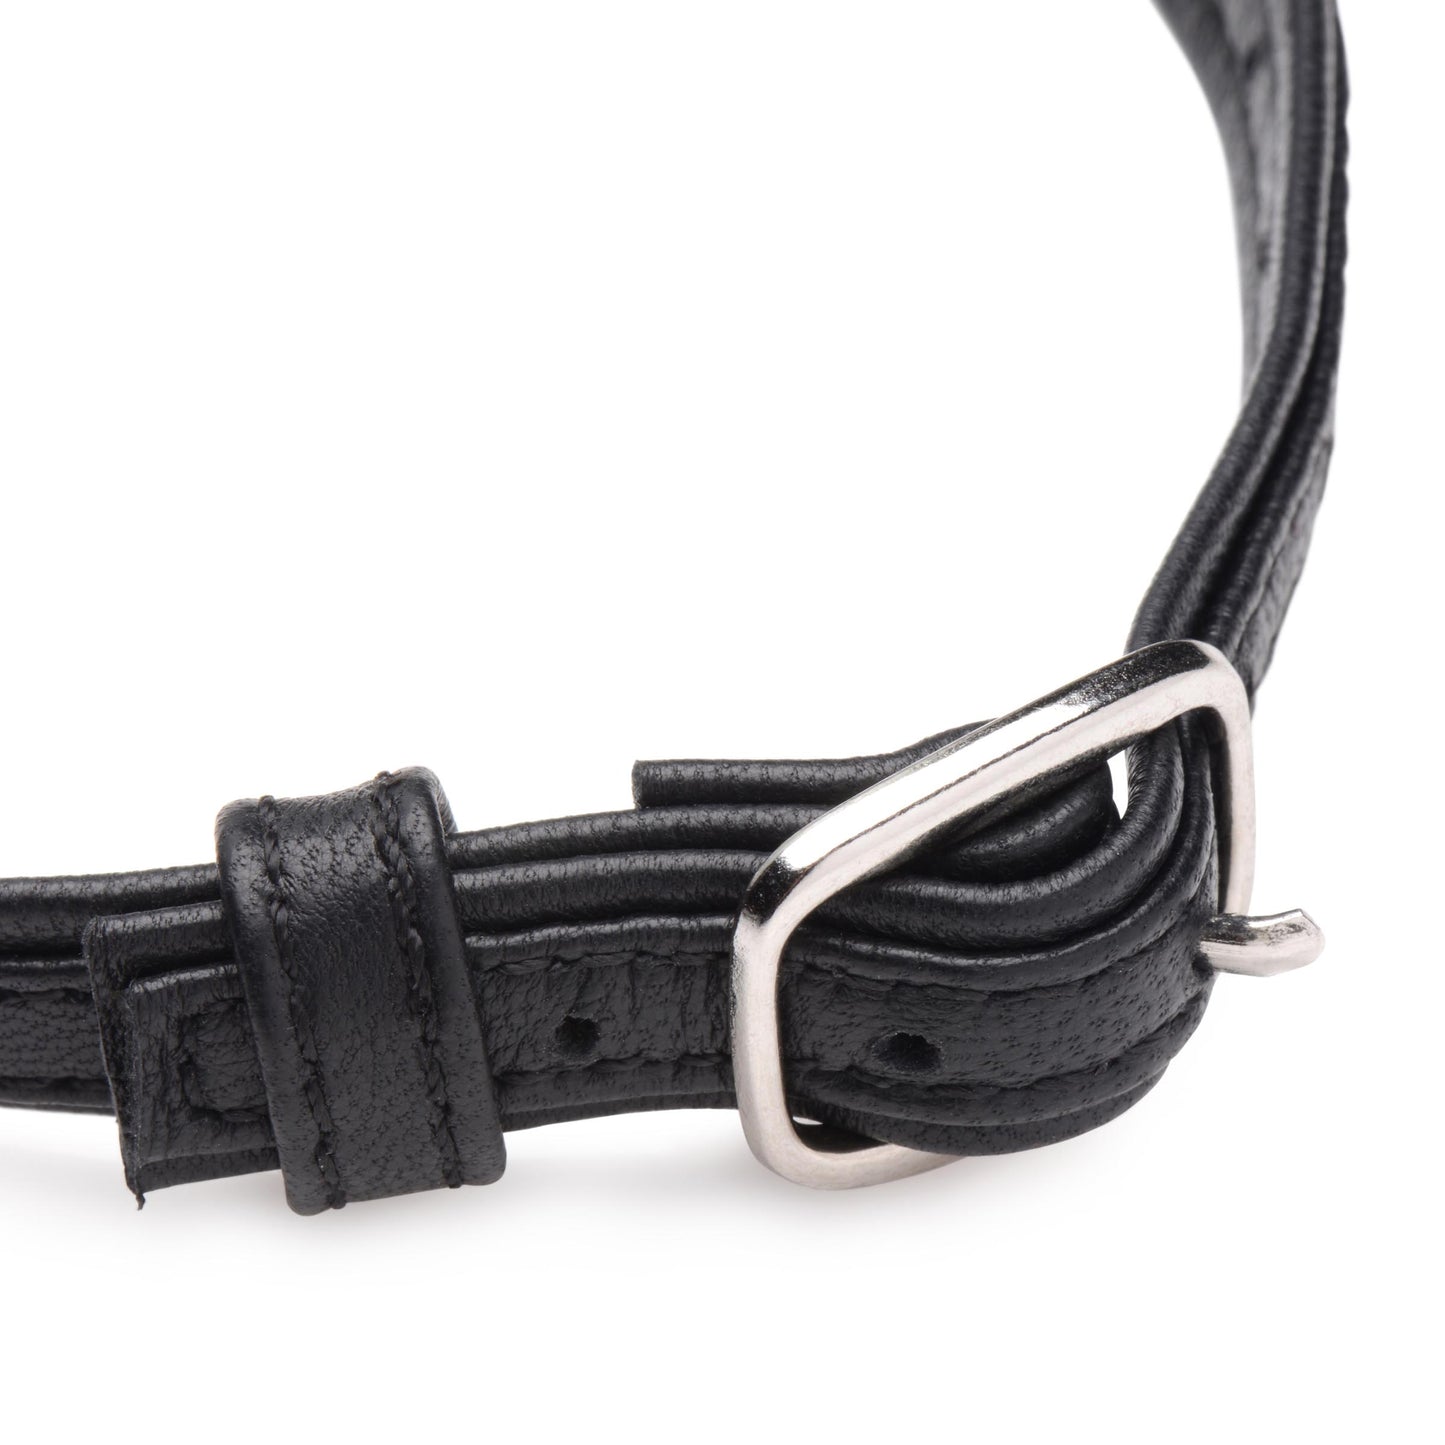 Heart Lock Leather Choker with Lock and Key - Black - UABDSM